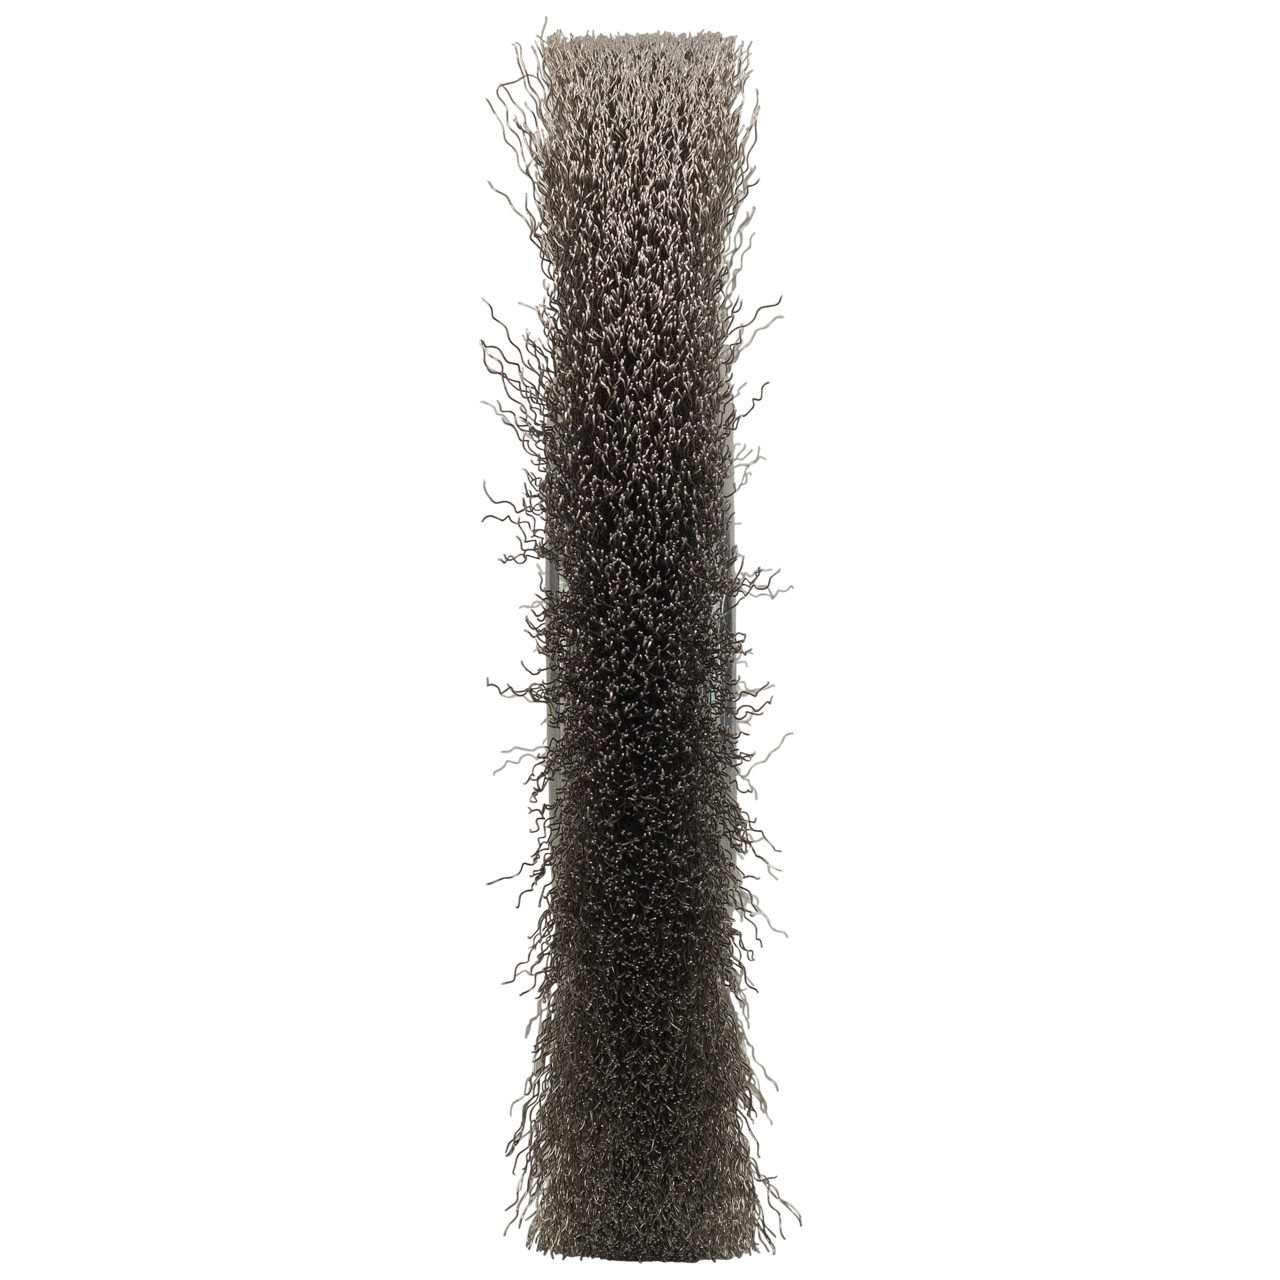 Spazzole rotonde Tyrolit DxLxH 150x18x27x32 Per acciaio inox, forma: 1RDW - (spazzole rotonde), Art. 896116